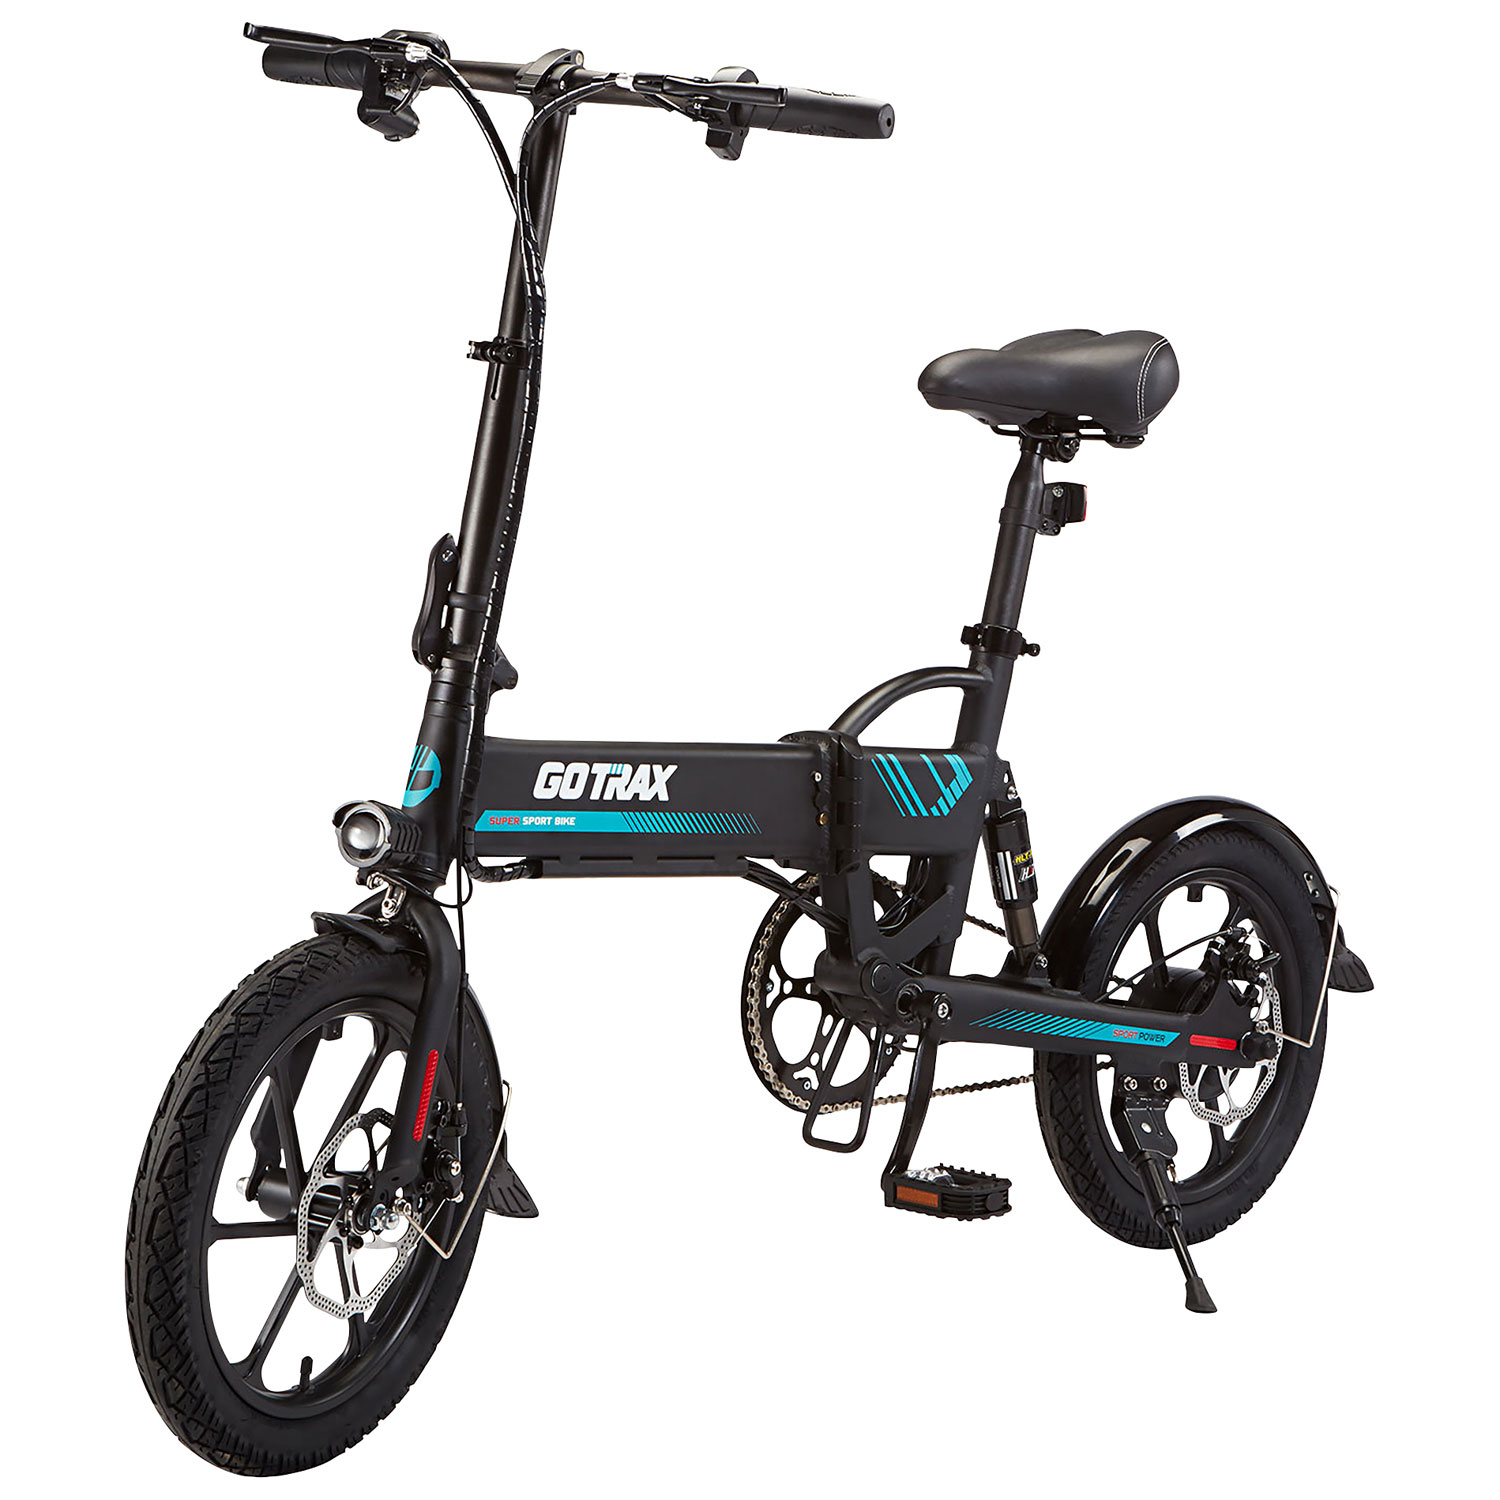 GOTRAX EBE1/E01 350W Foldable Electric City Bike with up to 45km Battery Range - Black